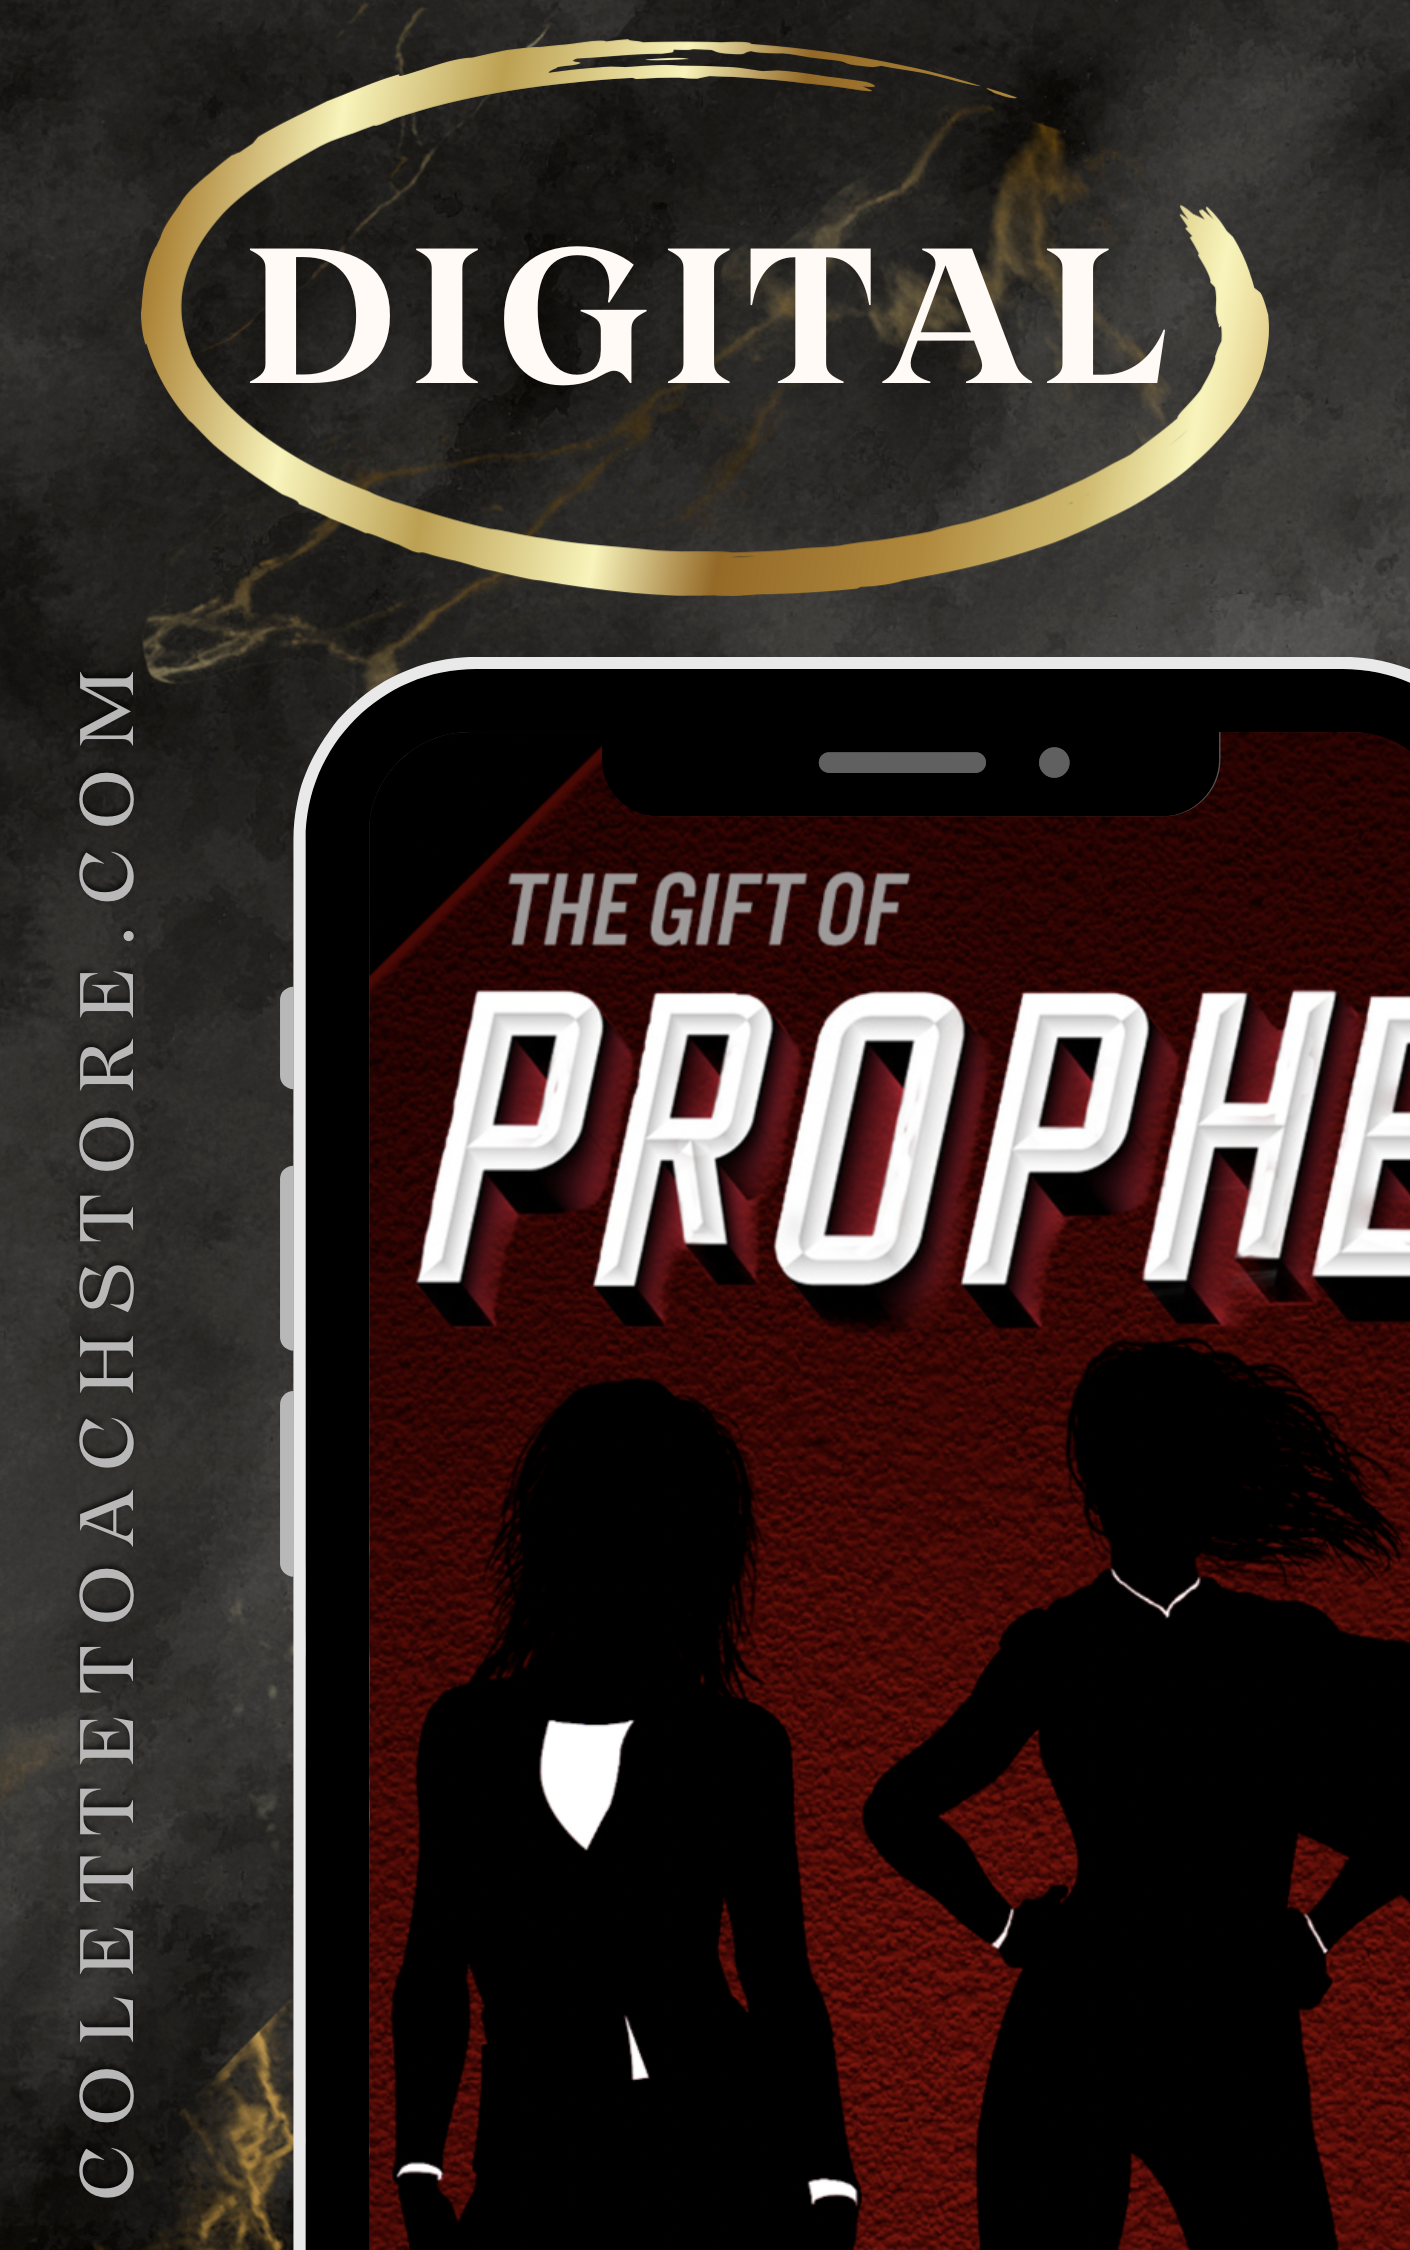 The Gift of Prophecy for the #NextGenProphet